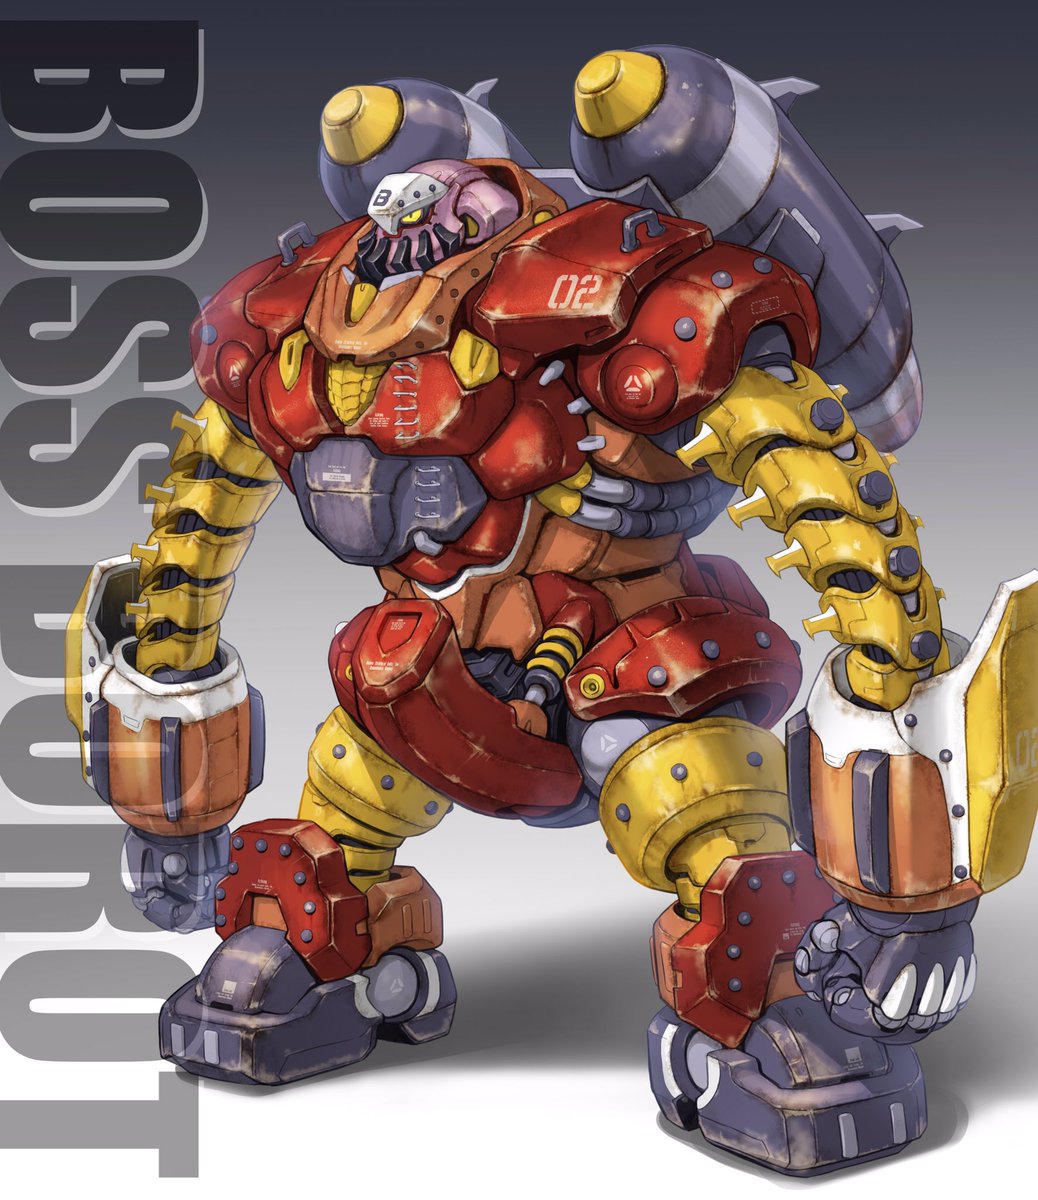 Boss Borot
by Maeda Hiroyuki
.
#artworks #ボスボロット #ボスロボット #mazingerz #greatmazinger #mazinger #bossborot #bossrobot #grendizer #goldorak #goldrake